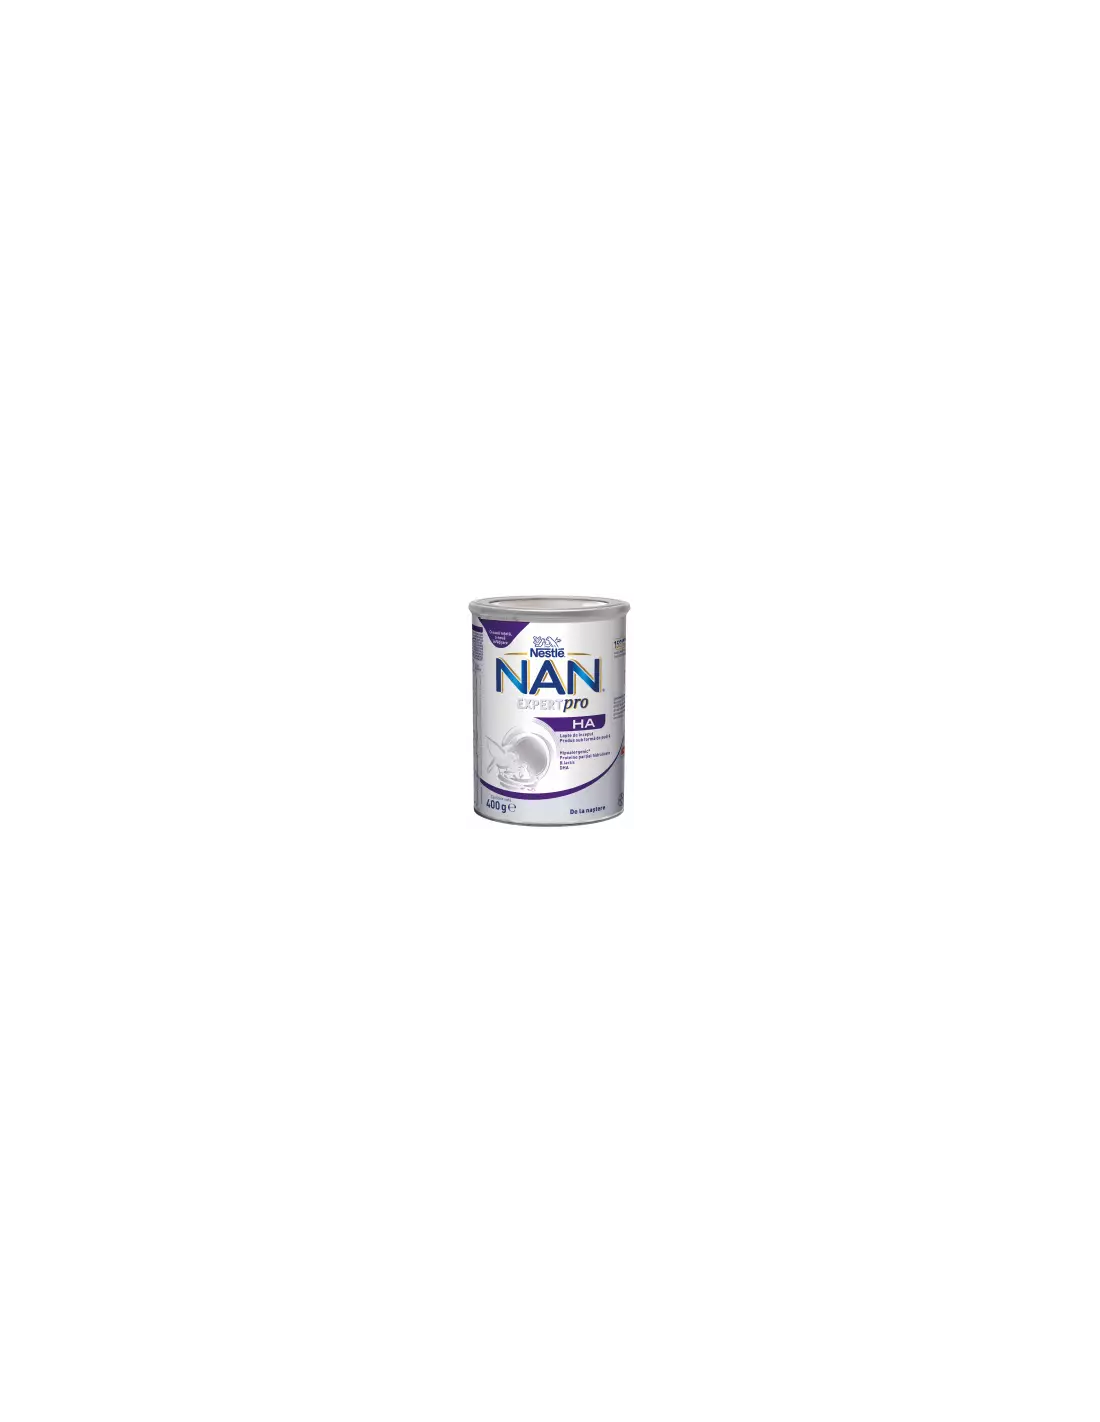 Nan HA Formula lapte praf premium hipoalergenic +0 luni, 400g, Nestle -  FORMULE-LAPTE - NAN